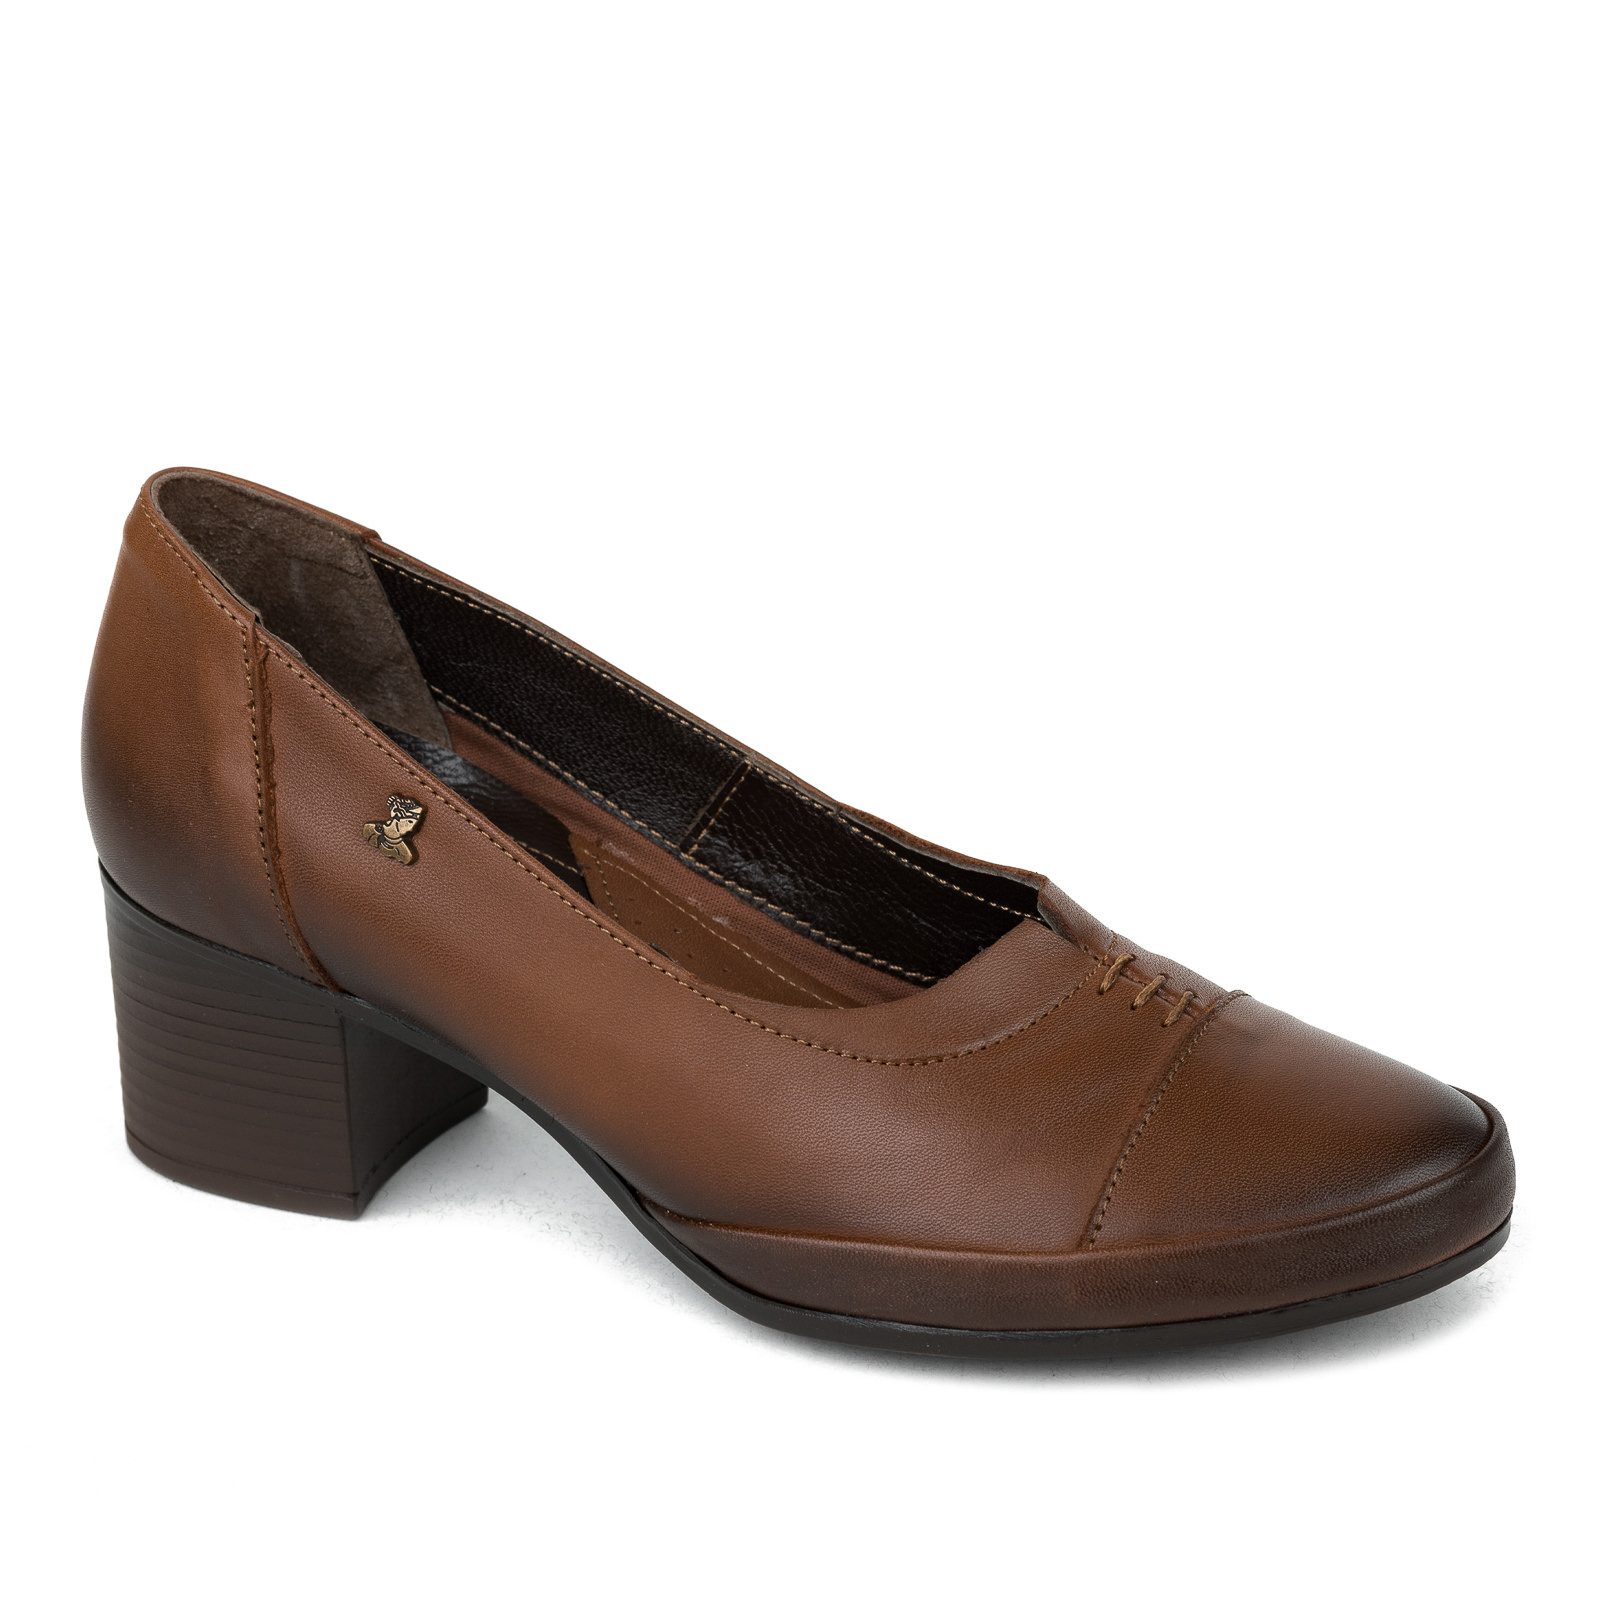 Leather high-heels B274 - BROWN